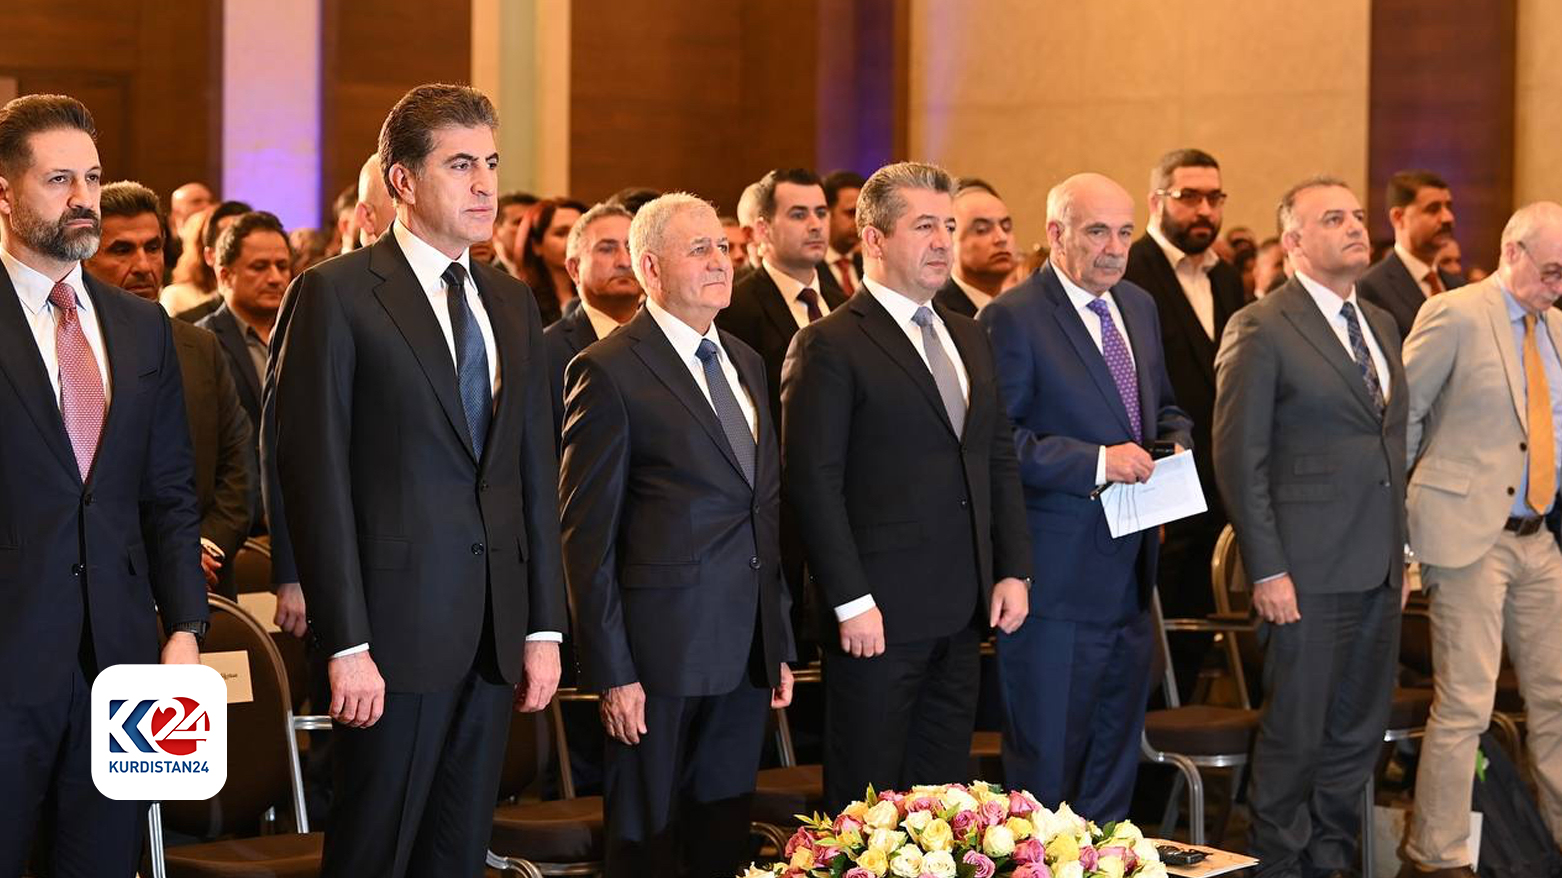 KRG President, Iraqi President and KRG Prime Minister were among the attendants of the symposium. (Photo: Kurdistan 24)